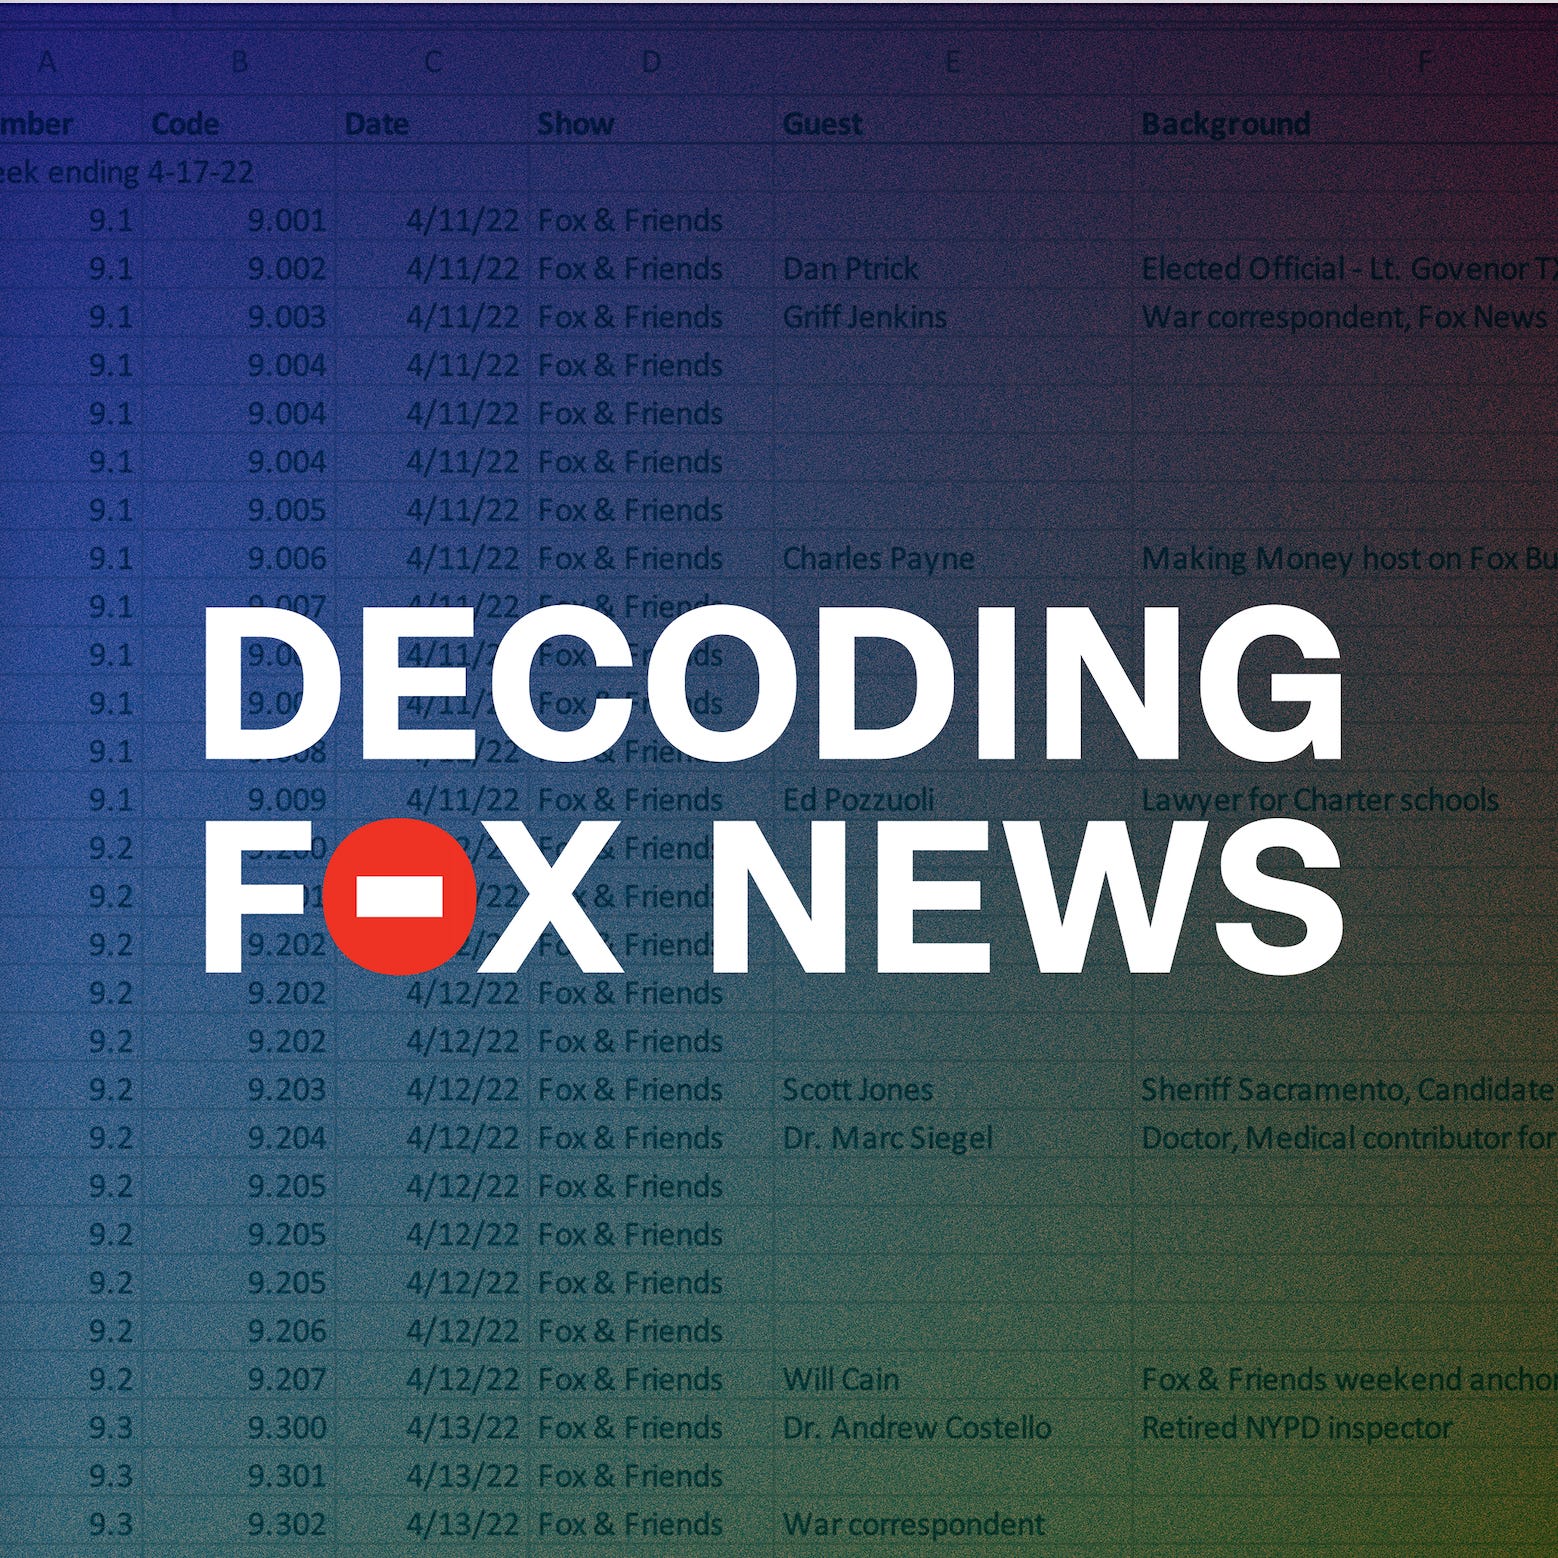 Decoding Fox News - Episode 1 - The New Fake Clinton Scandal week ending 2/20/22